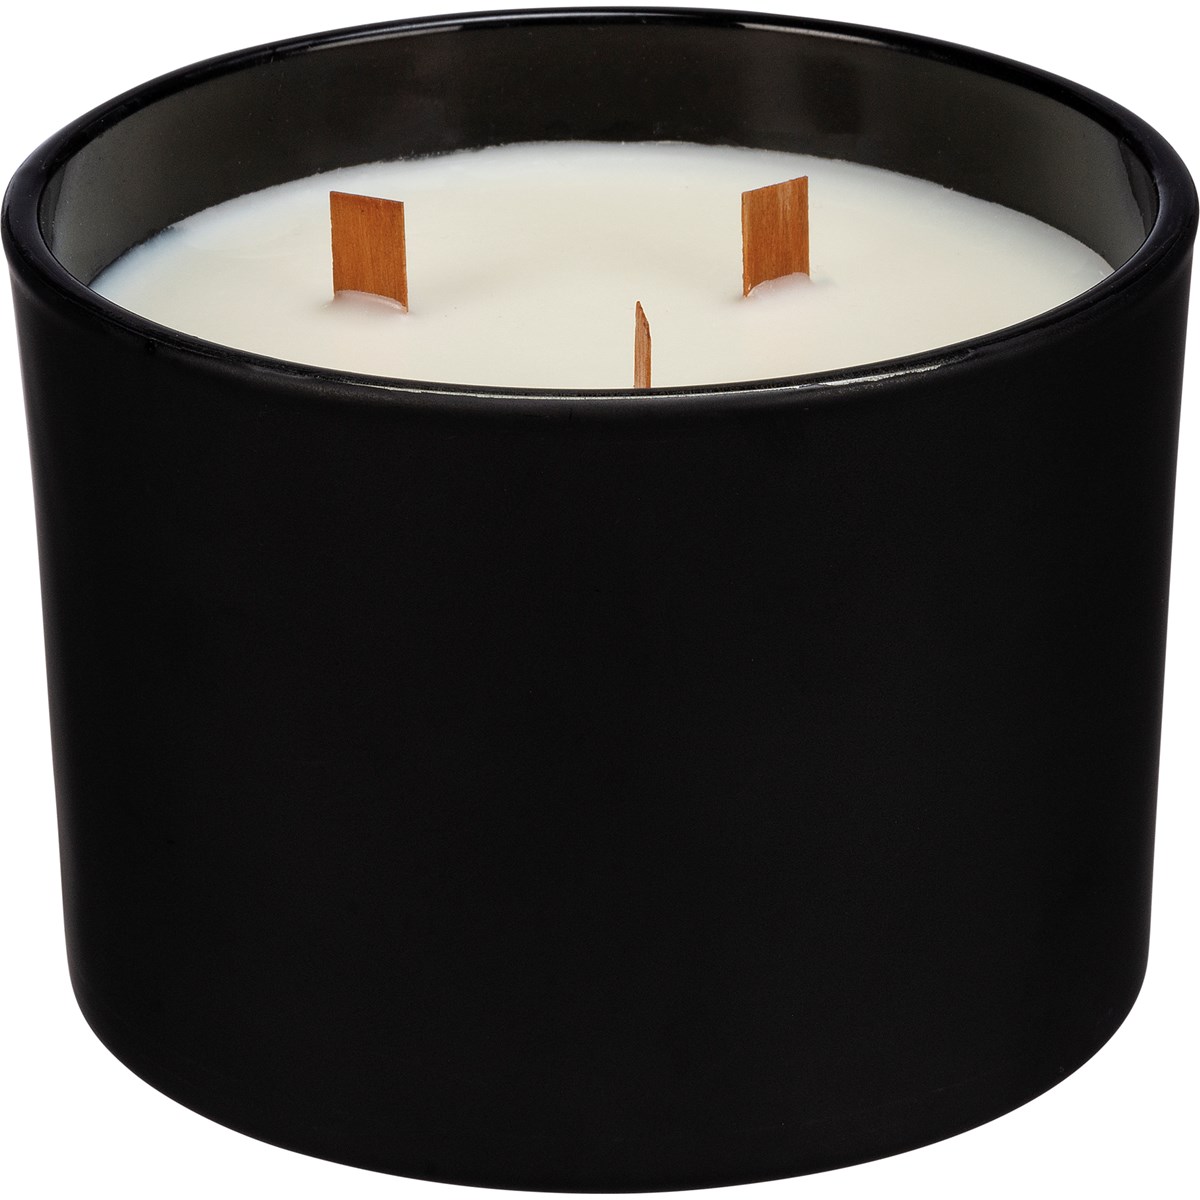 Jar Candle - Dog Lover - 14 oz., 4.50" Diameter x 3.25" - Soy Wax, Glass, Wood